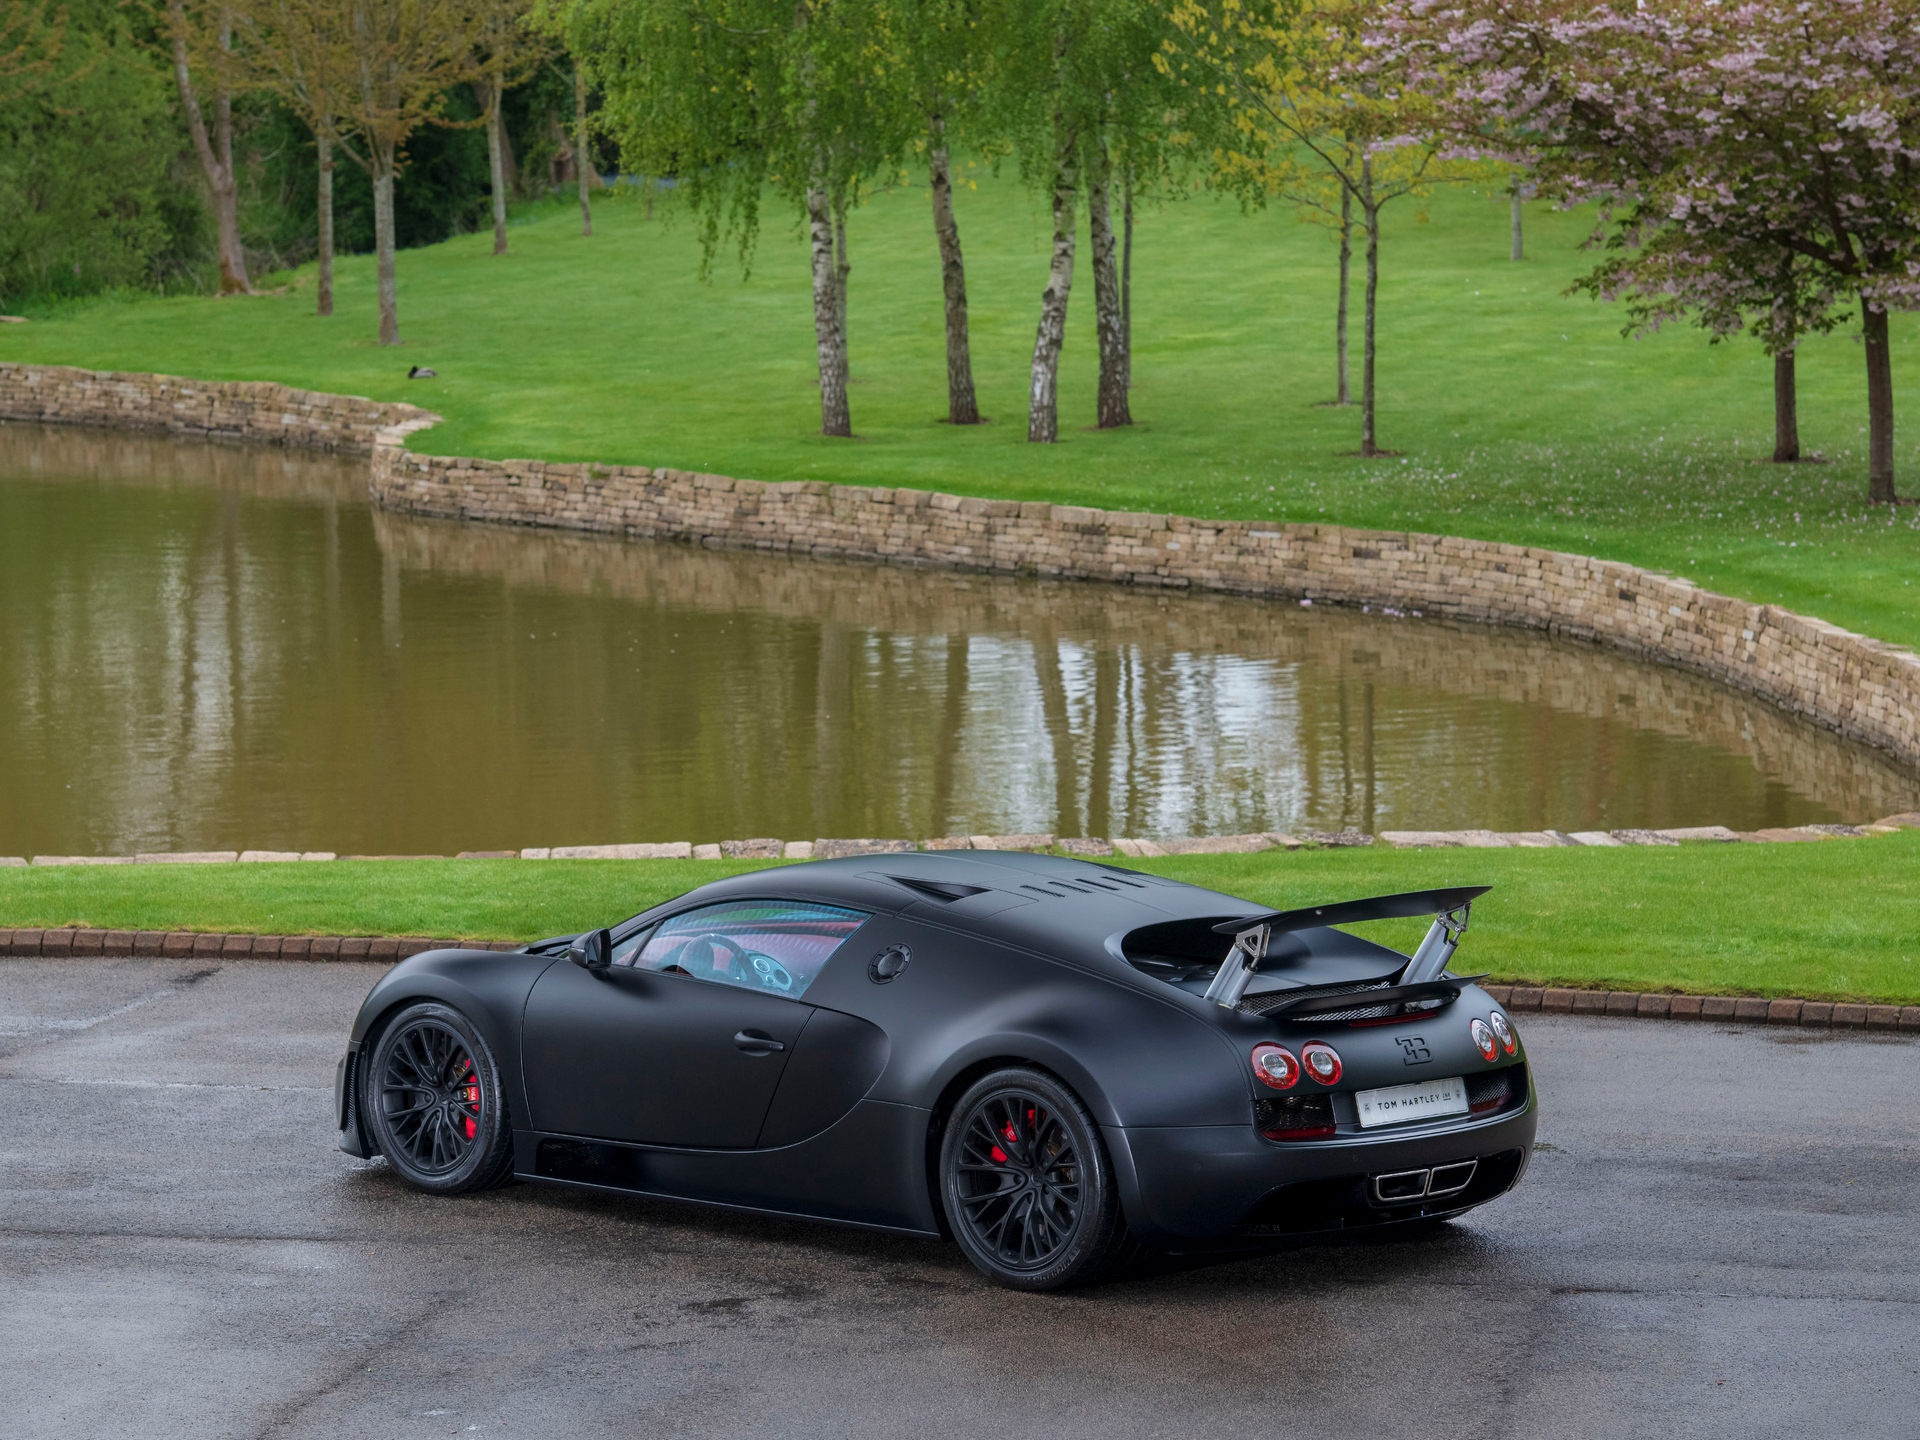 Bugatti Veyron Super Sport cuoi cung duoc rao ban anh 11